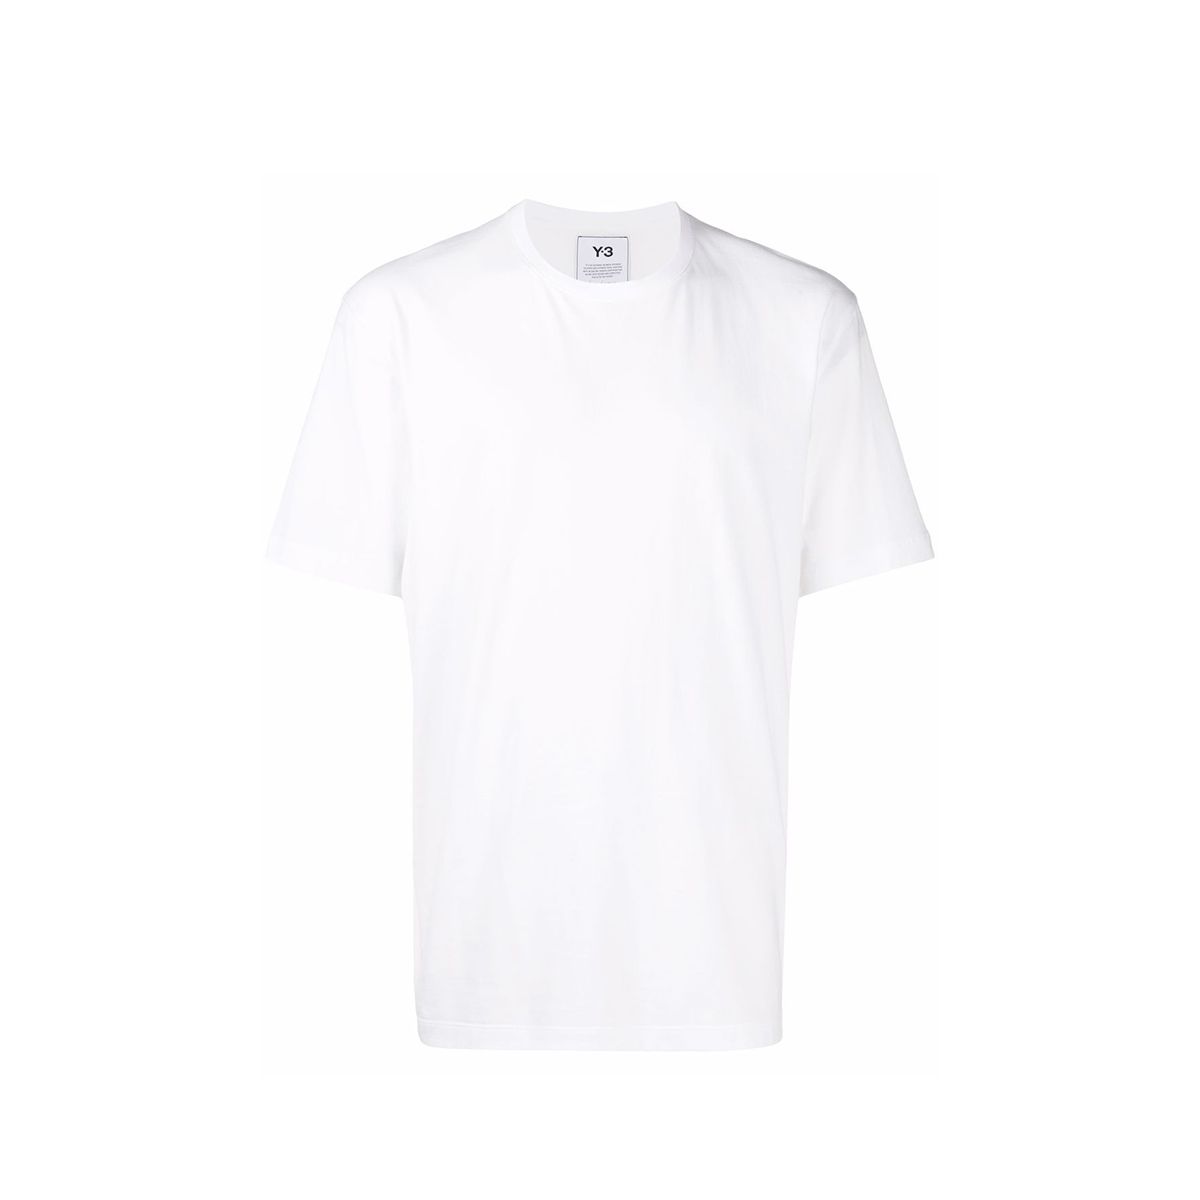 CL Logo White T-Shirt